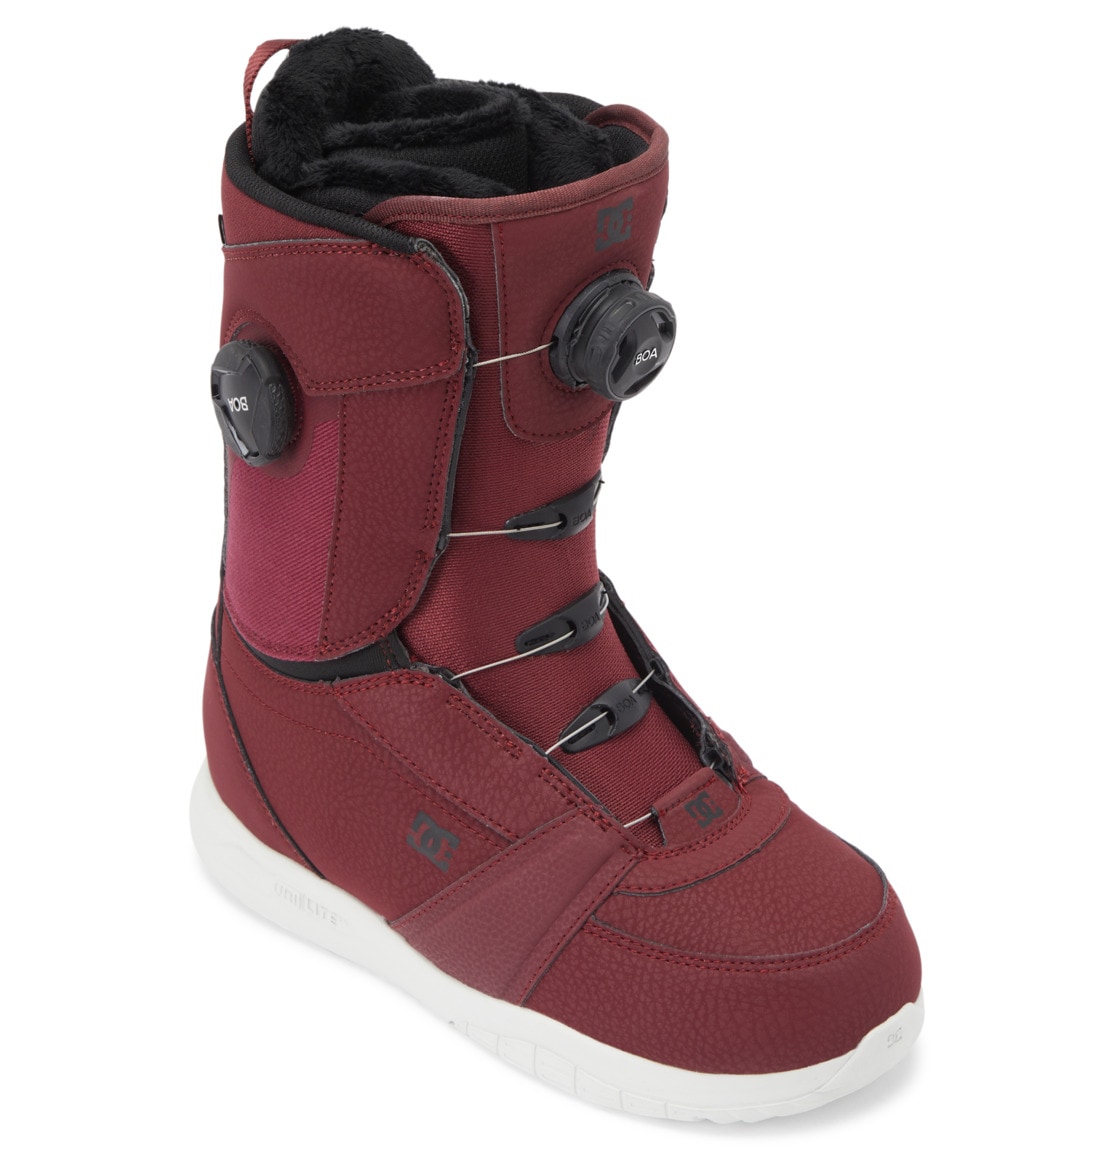 DC Shoes Snowboardboots "Lotus"